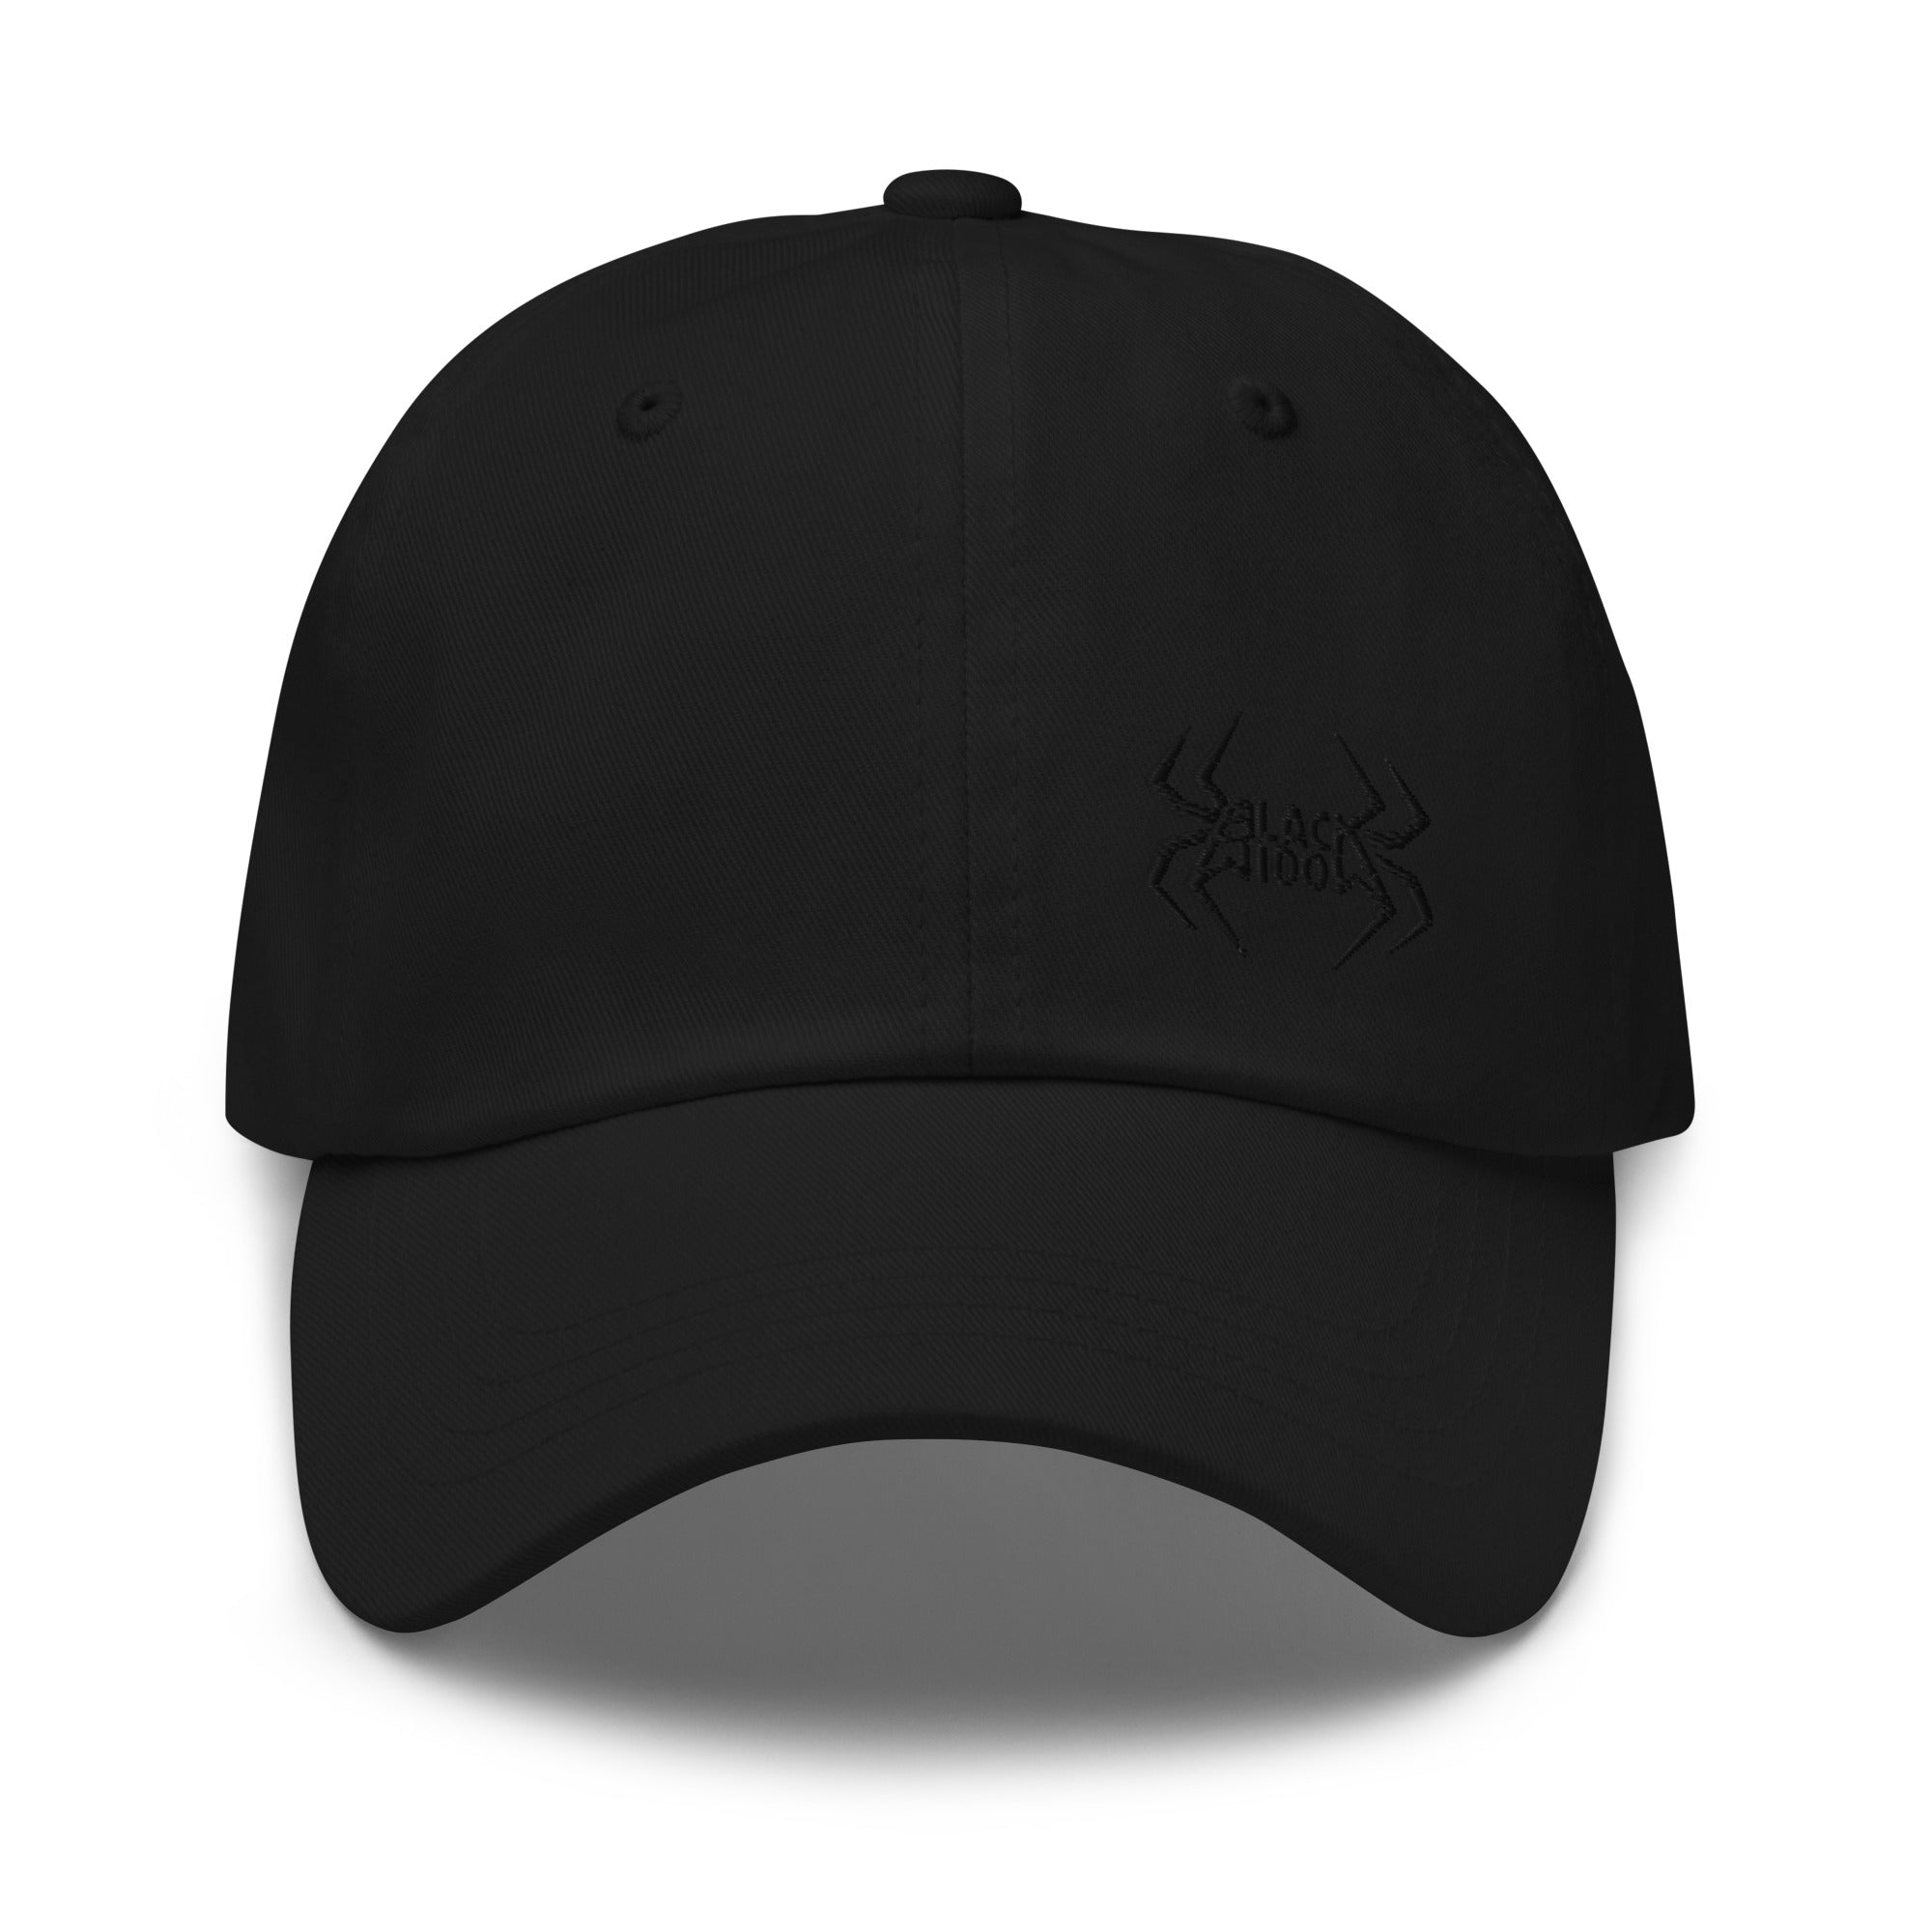 BW Dad hat (Black on Black)